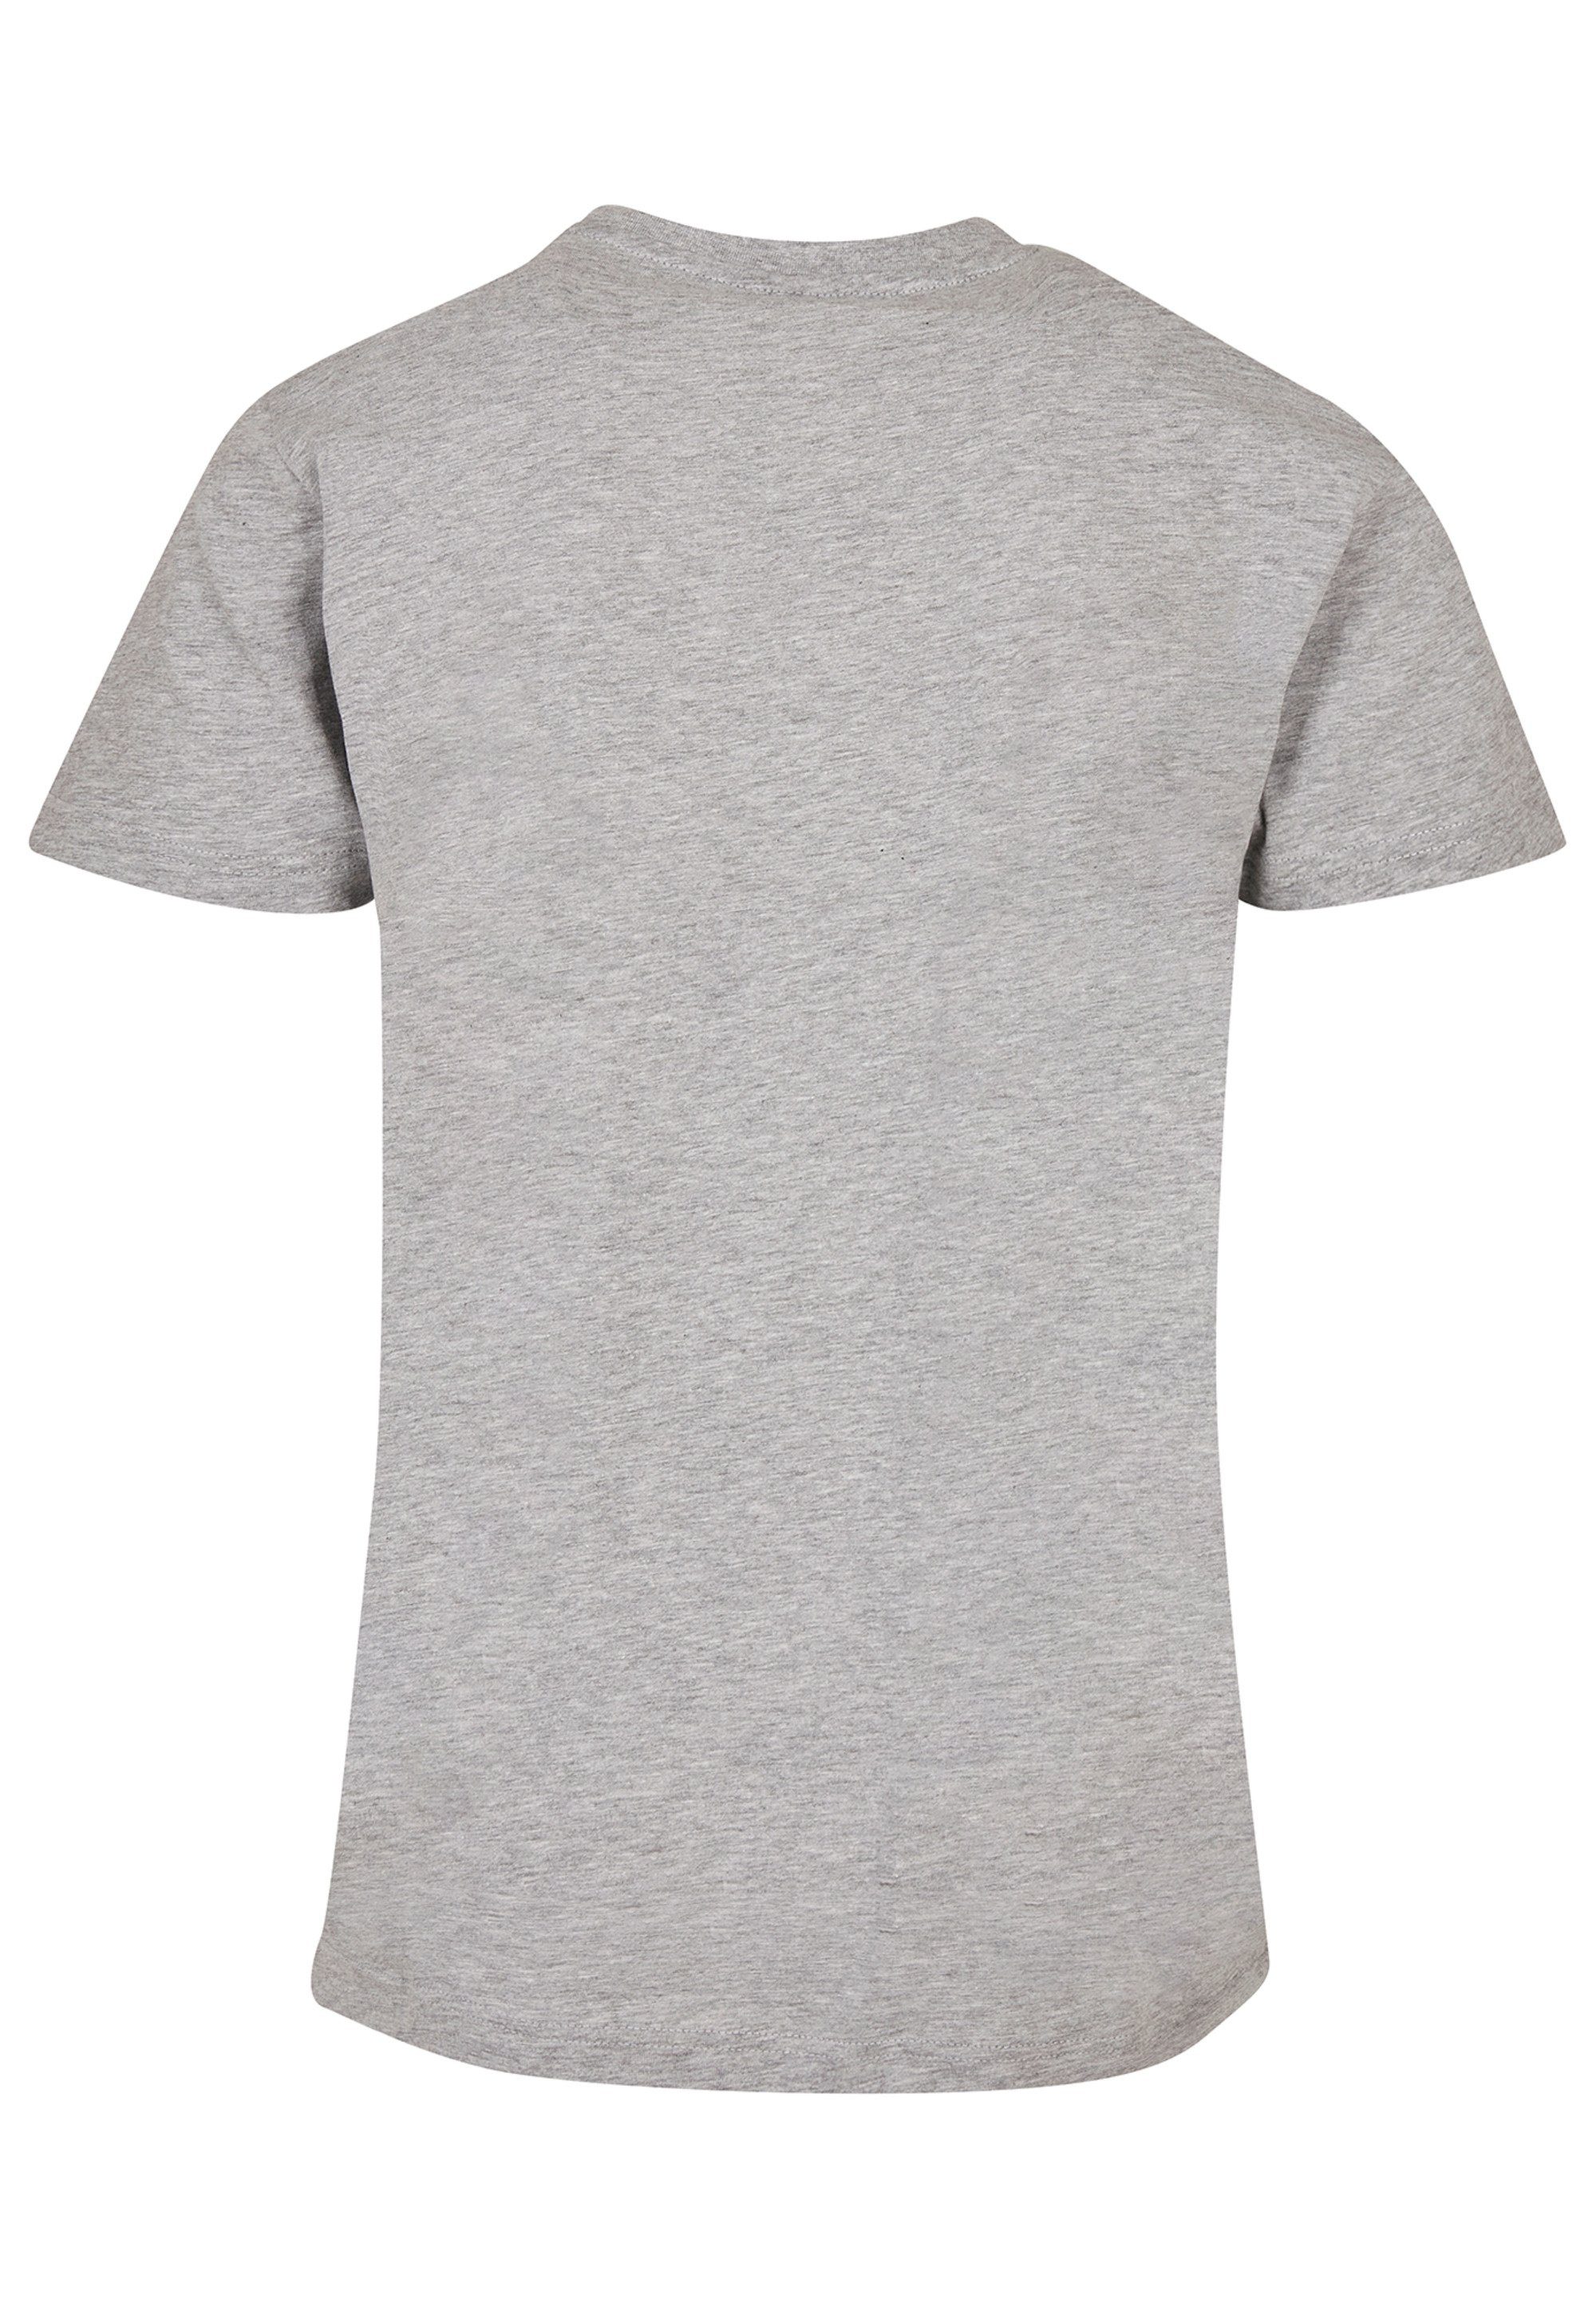 Manhatten Print T-Shirt TEE UNISEX grey heather F4NT4STIC East Village